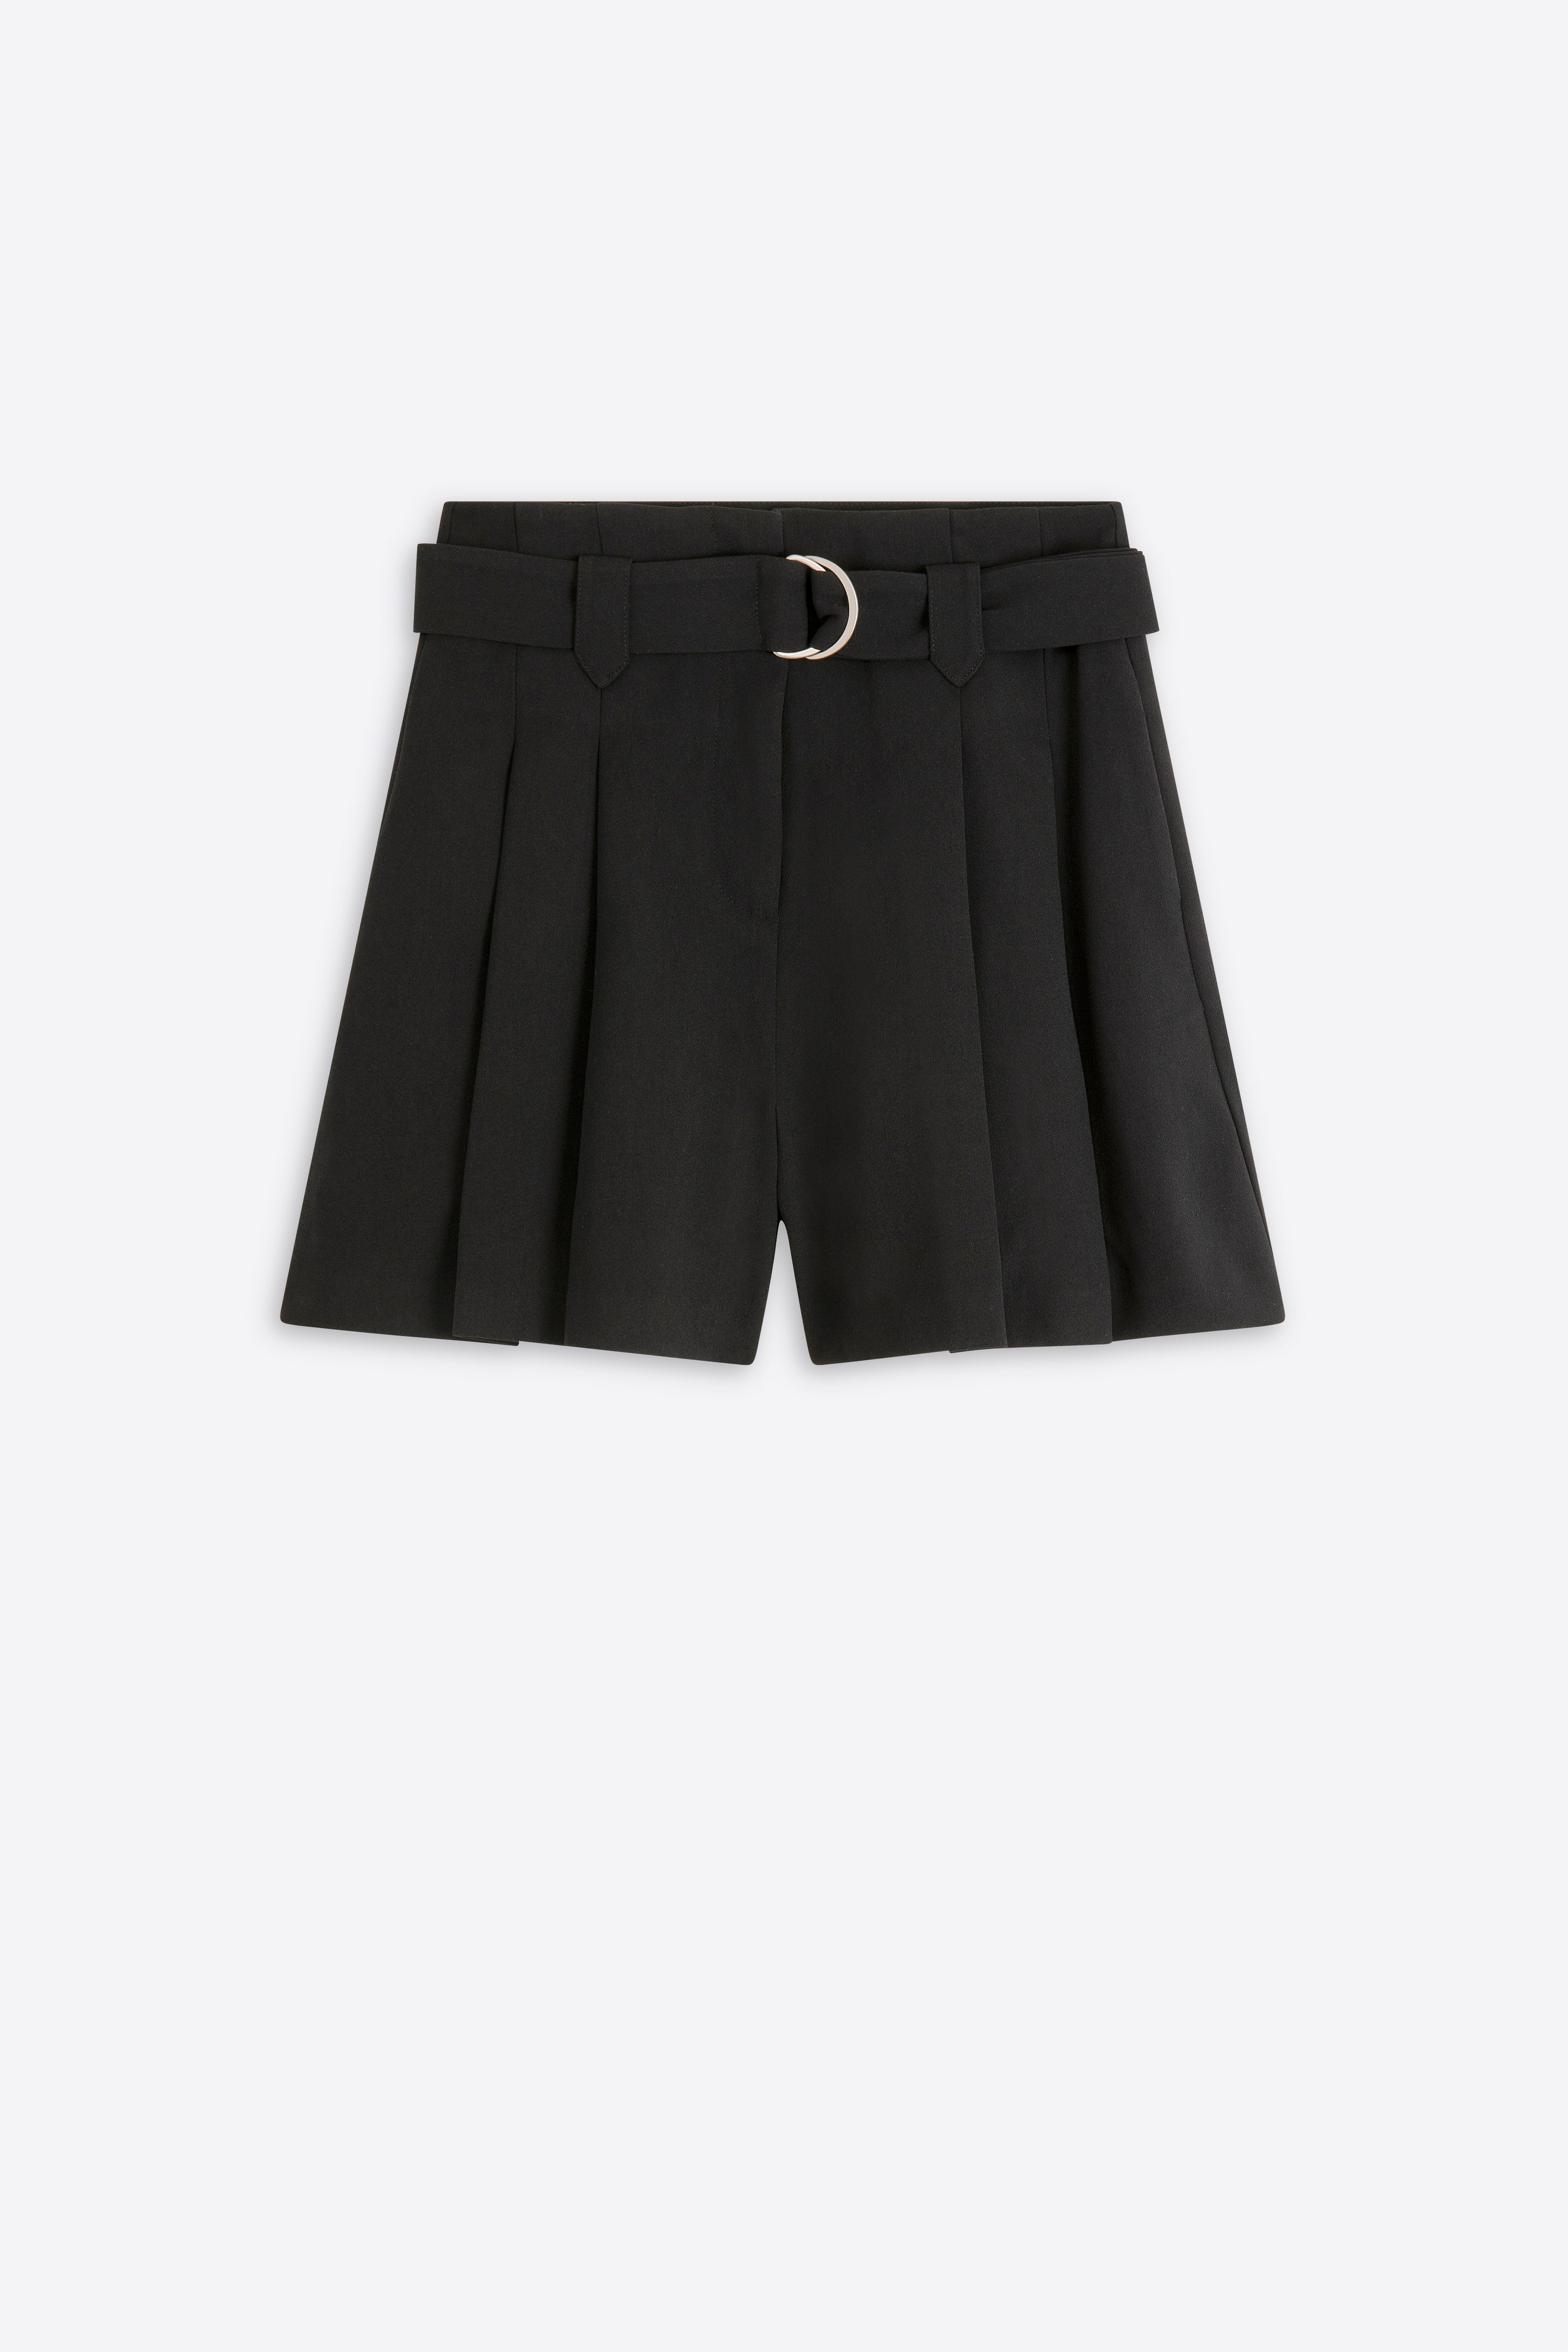 Benny black shorts | Suncoo